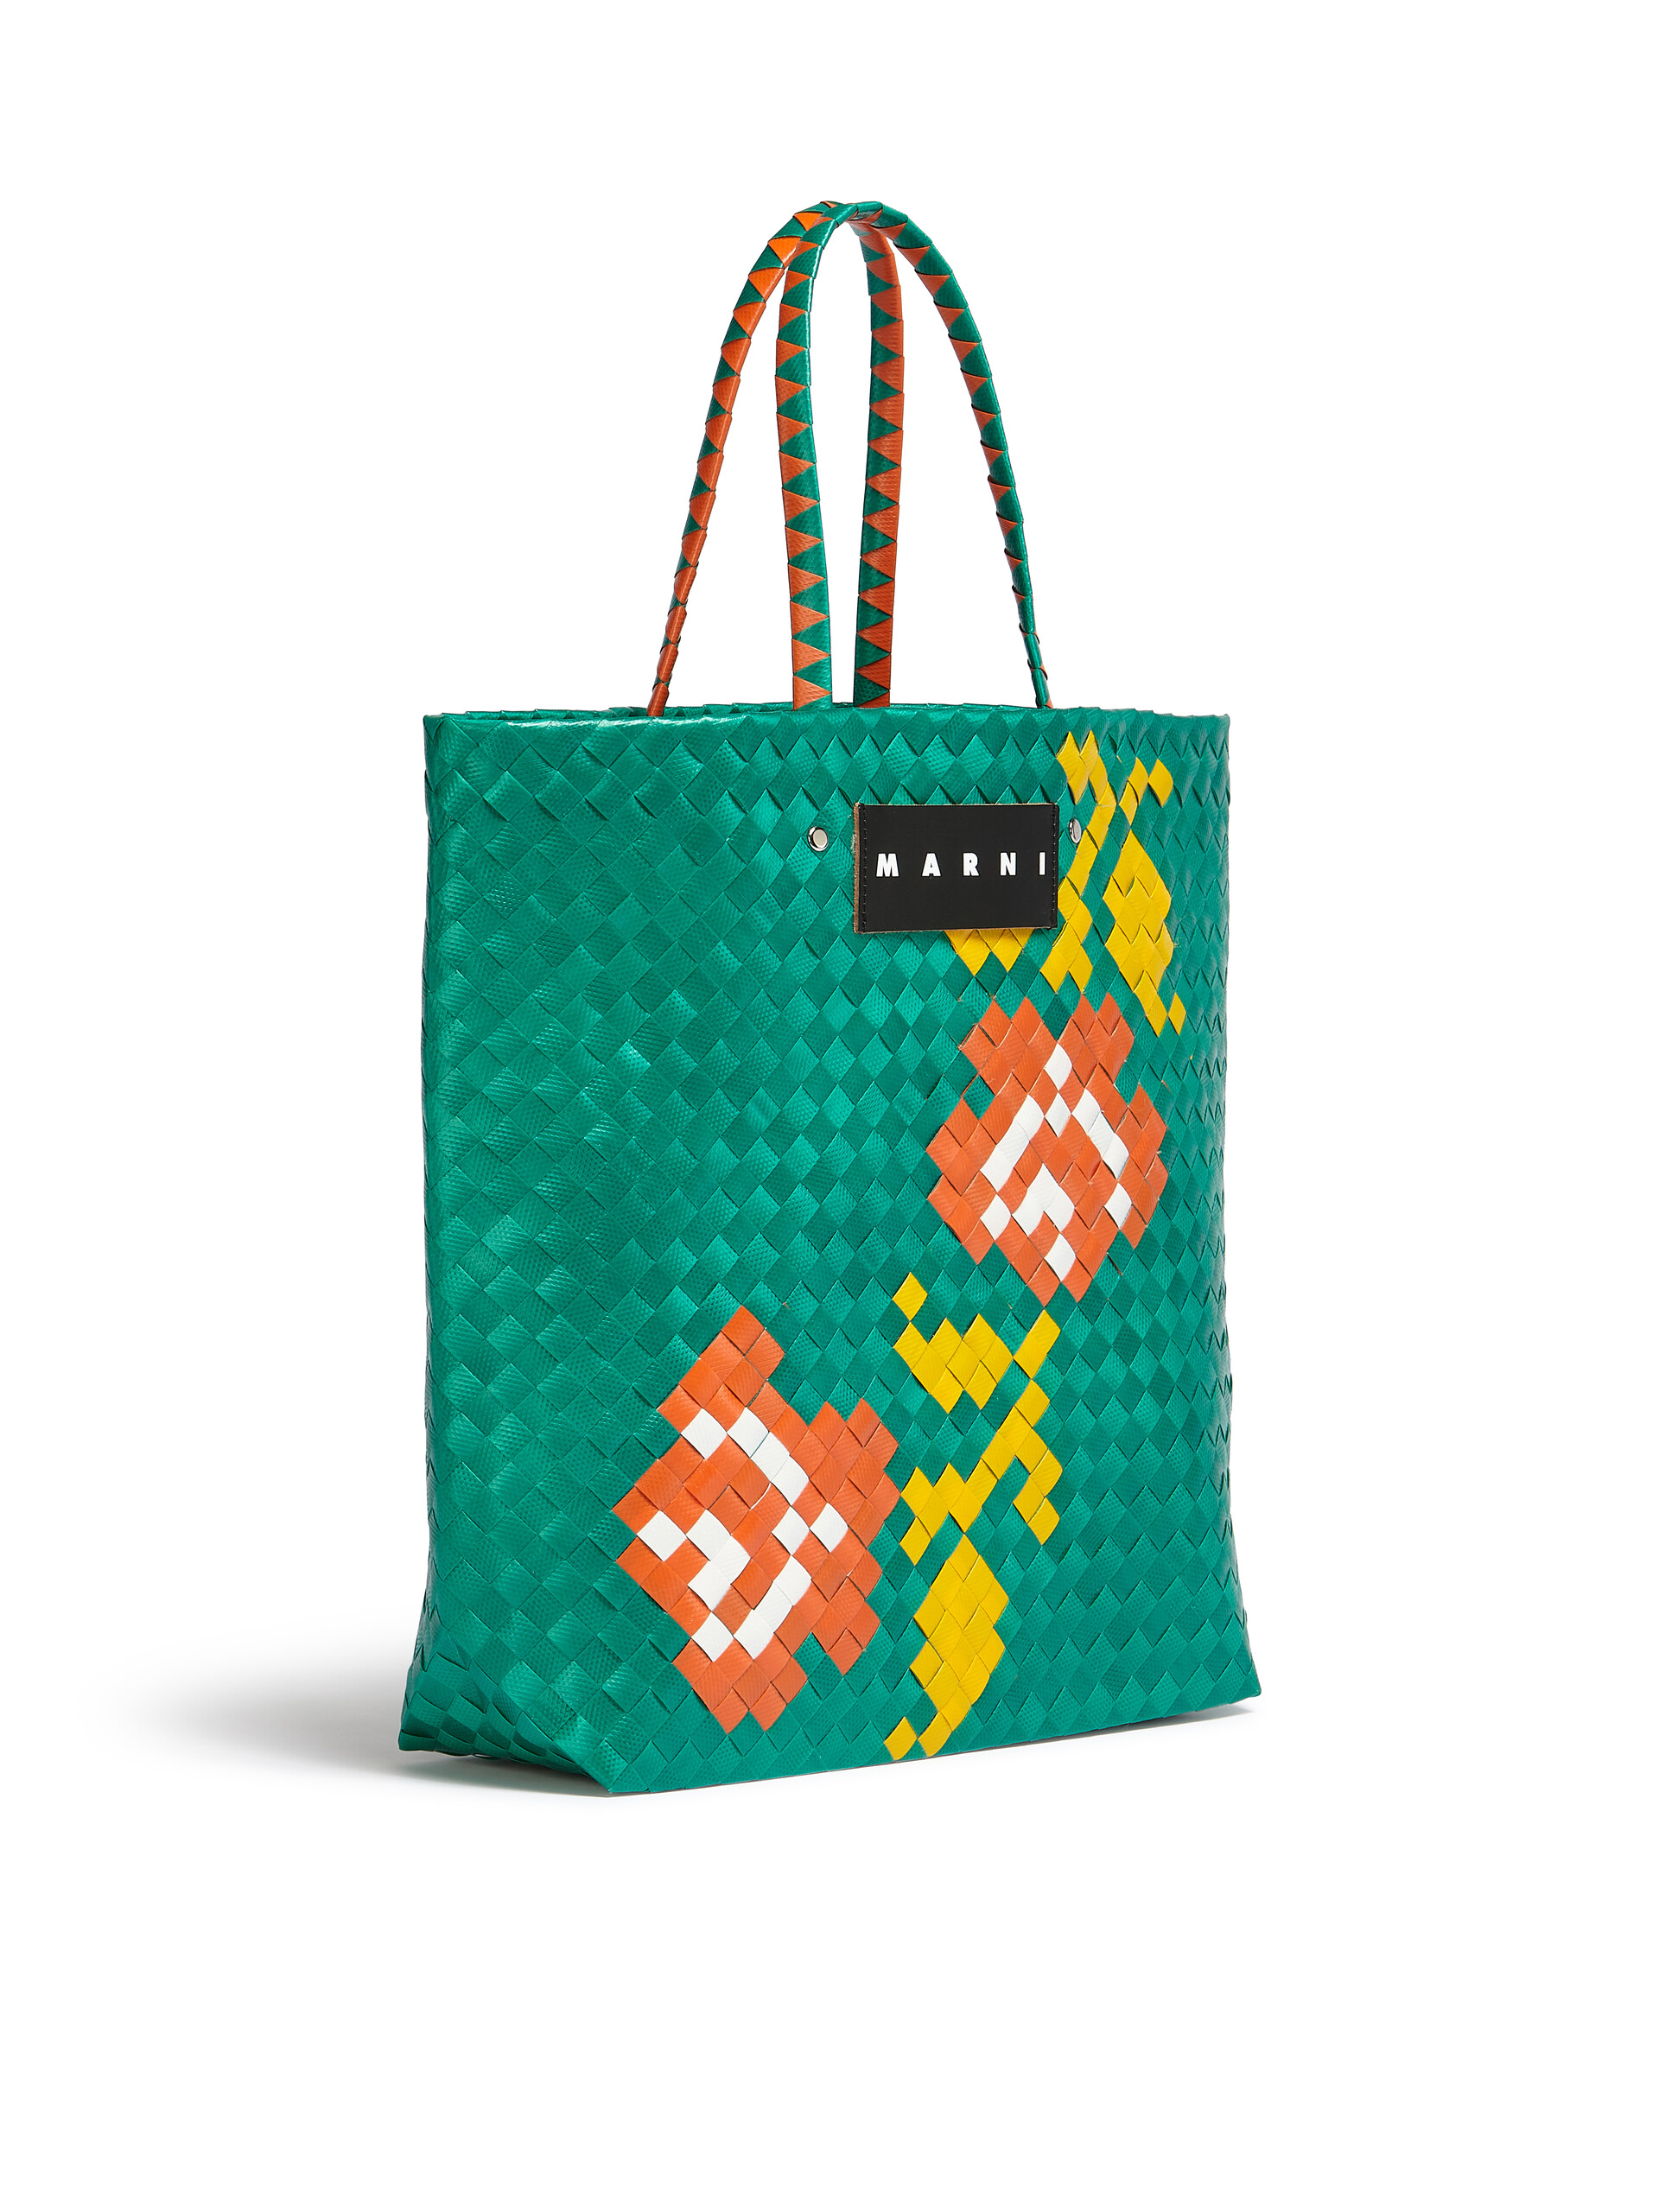 MARNI MARKET medium bag in green flower motif - Bags - Image 2